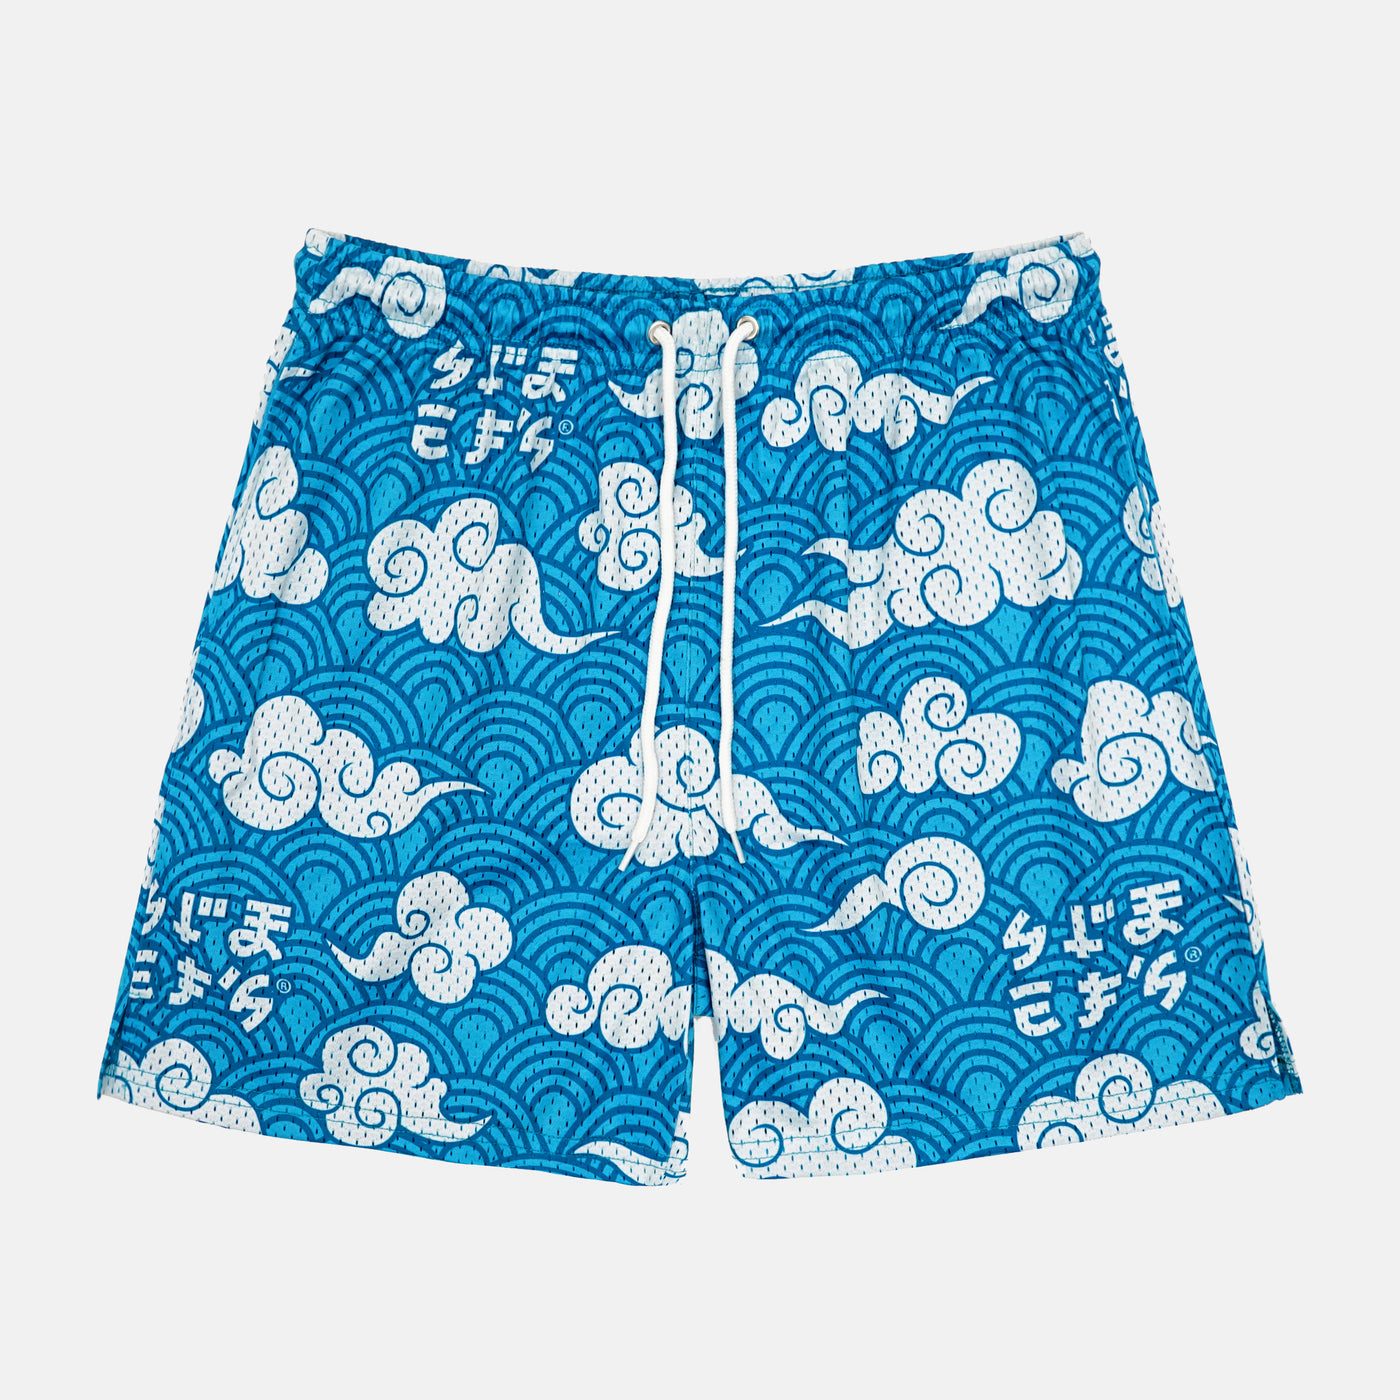 Sleefs Japan Kumo Clouds Shorts - 7"